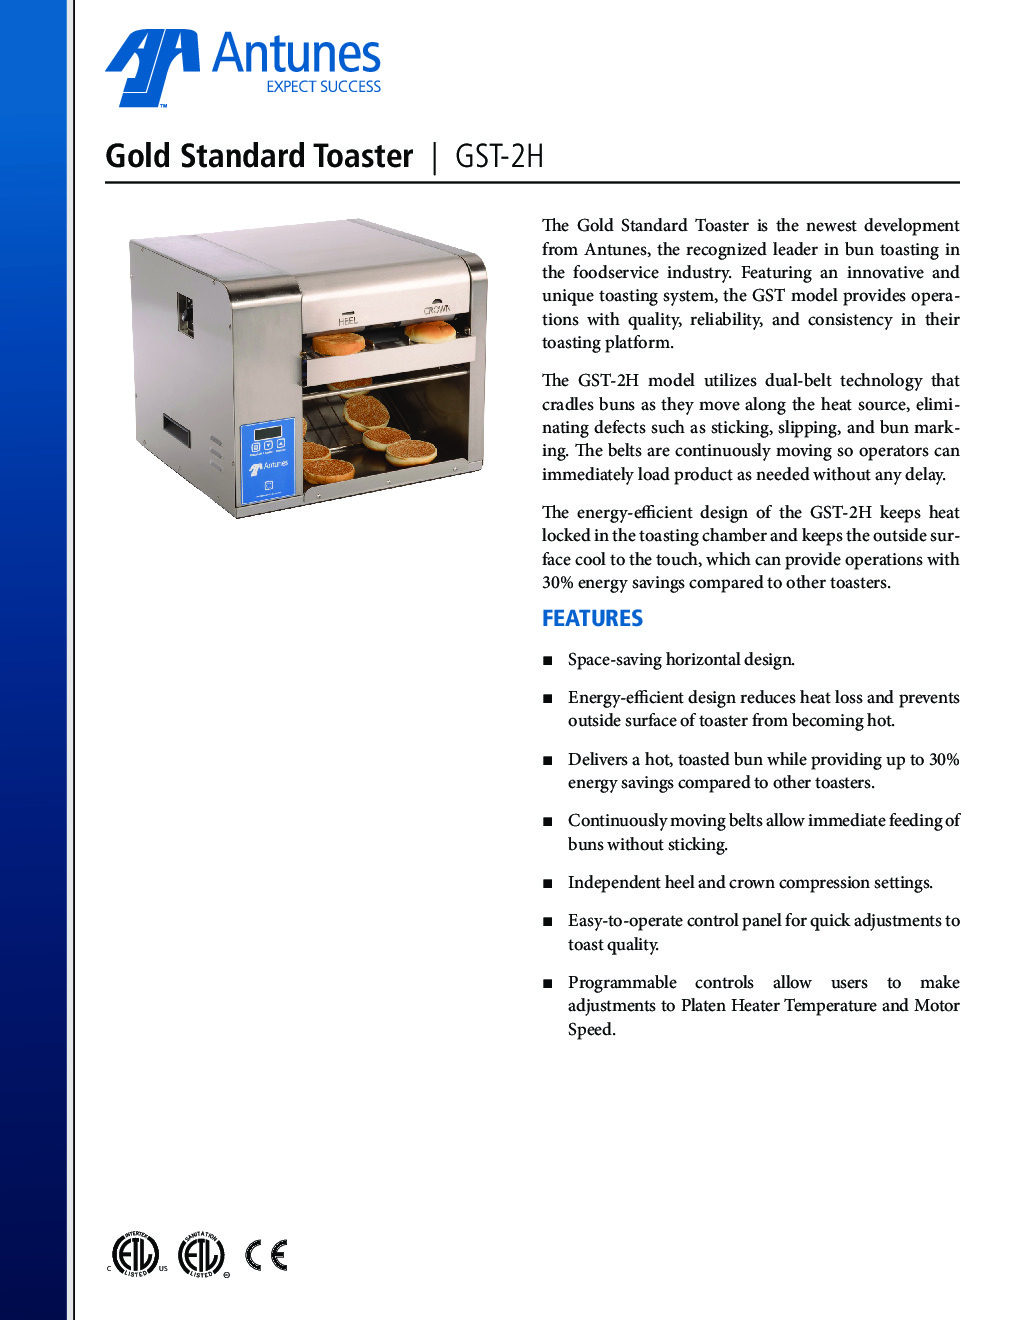 Antunes GST-2H-9210962 Conveyor Gold Standard Toaster